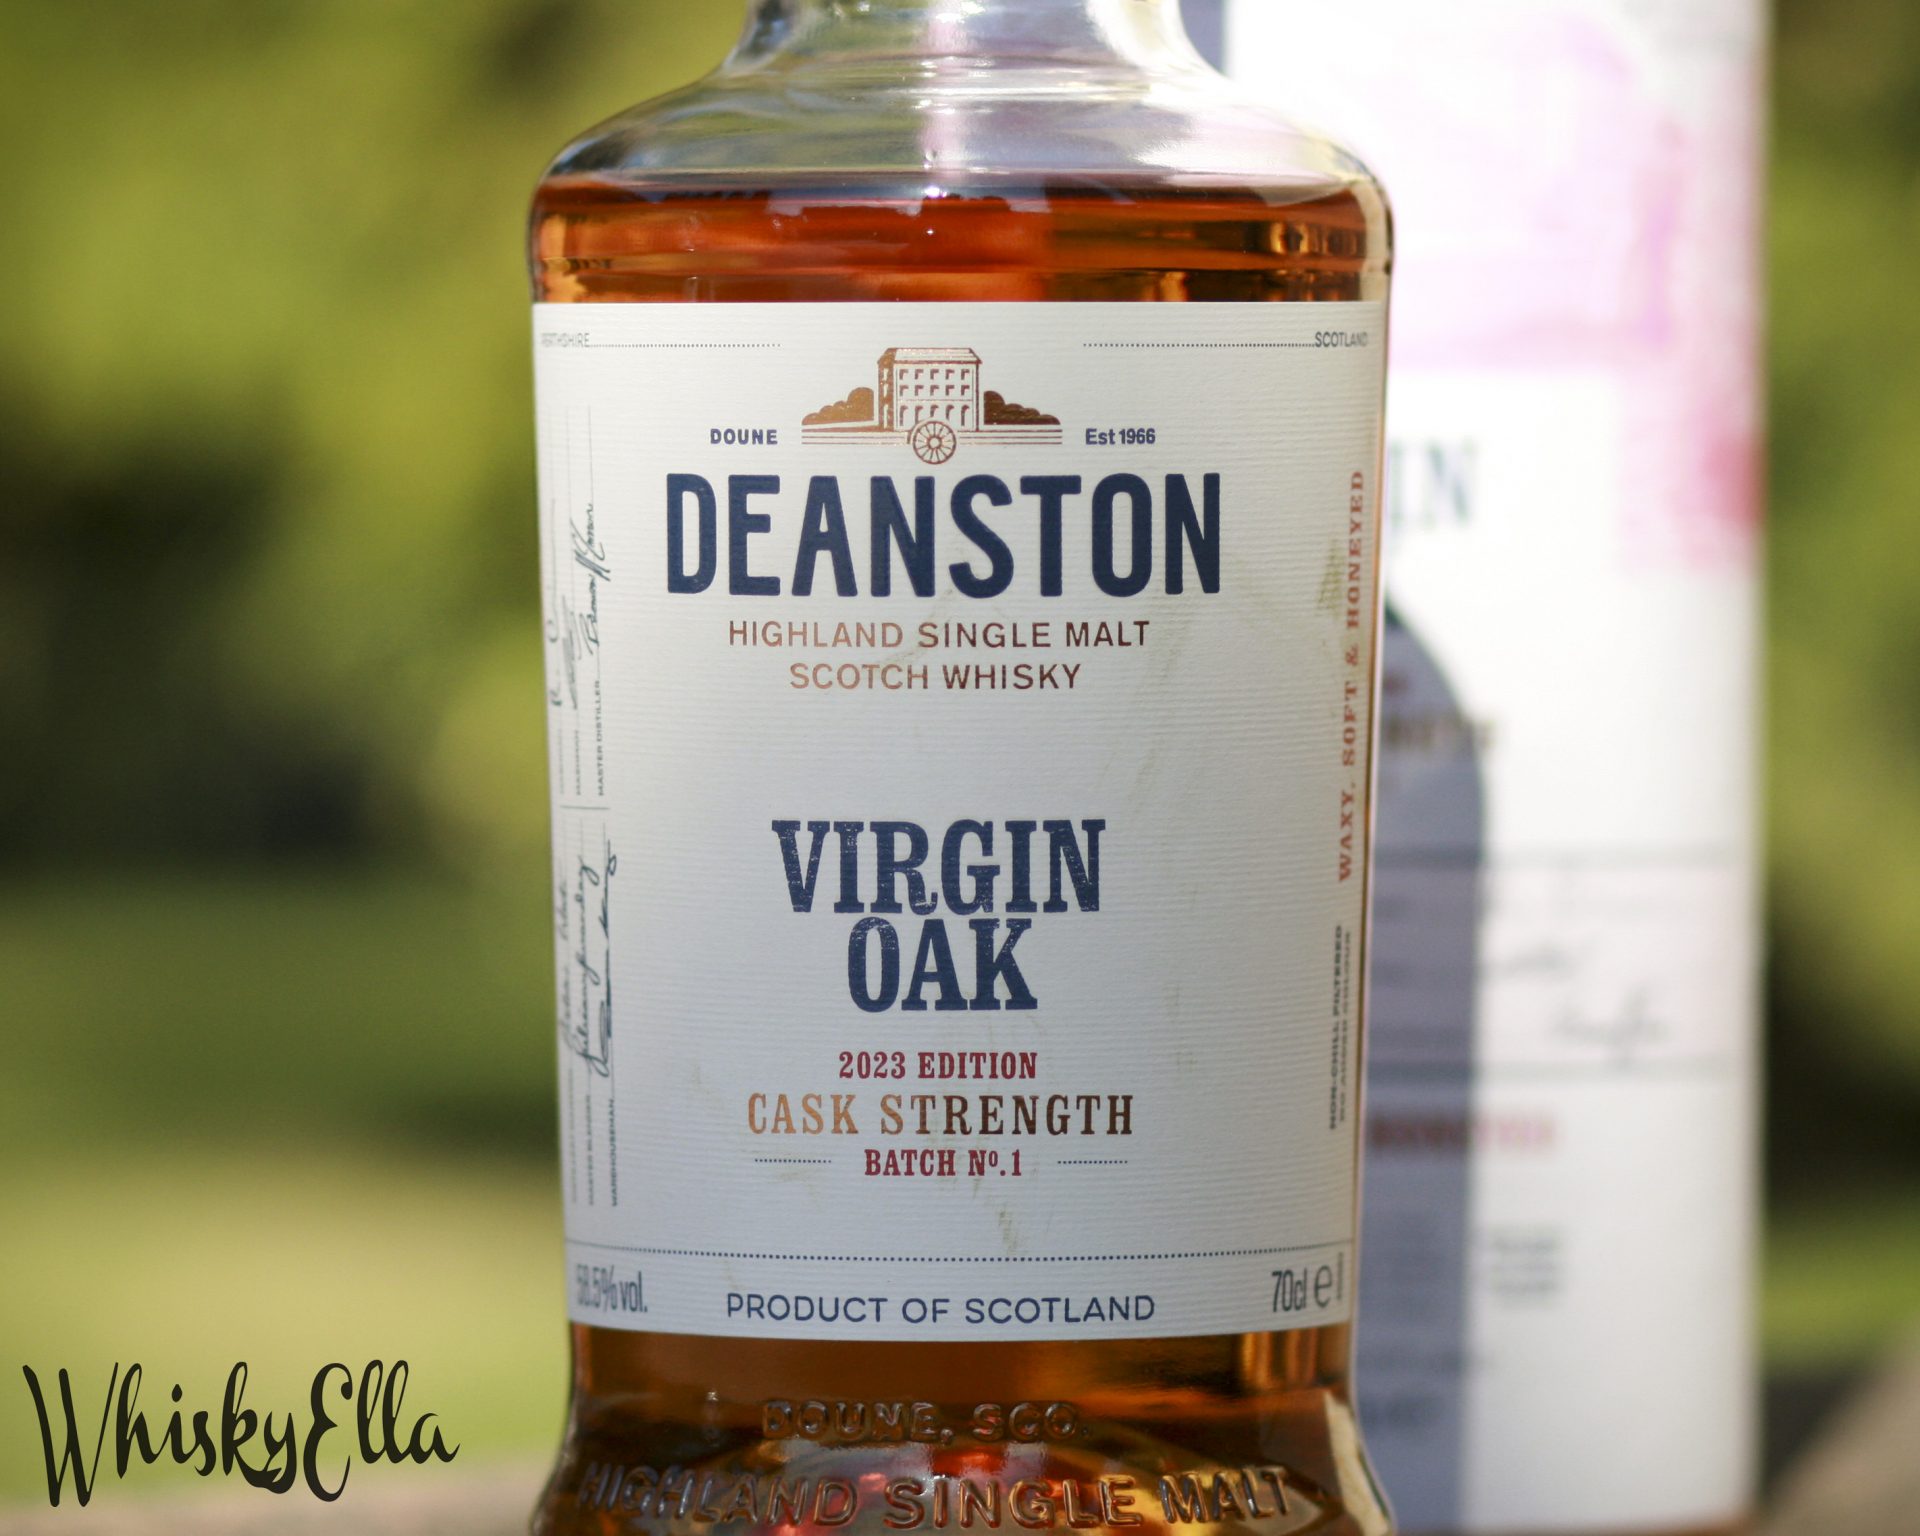 Nasza recenzja Deanston Virgin Oak Cask Strength Batch No.1 2023 Edition #226